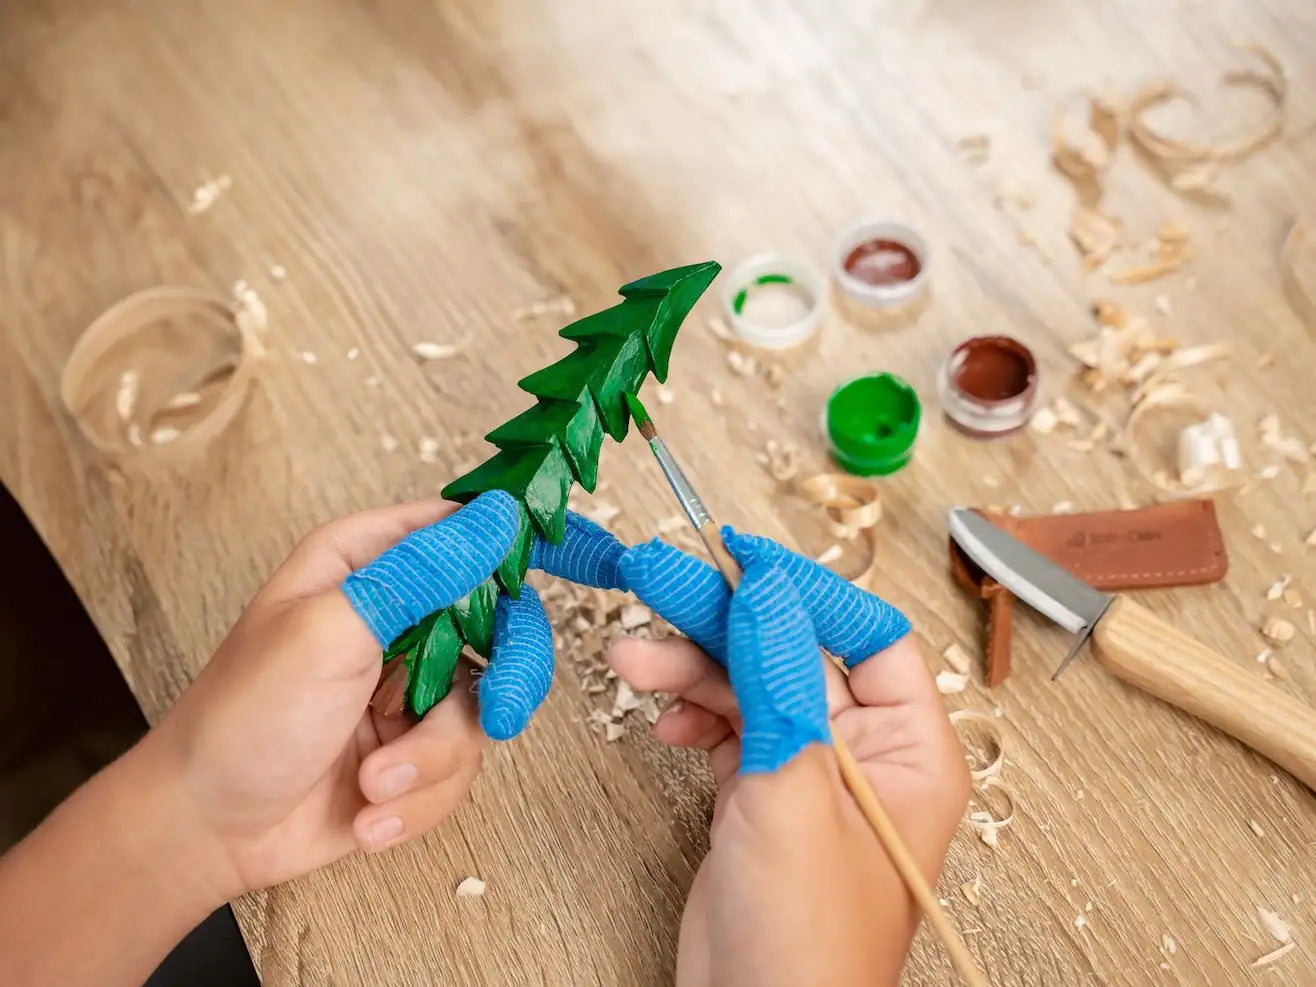 Wood Carving Kits from BeaverCraft: How Do We Make Them – BeaverCraft Tools